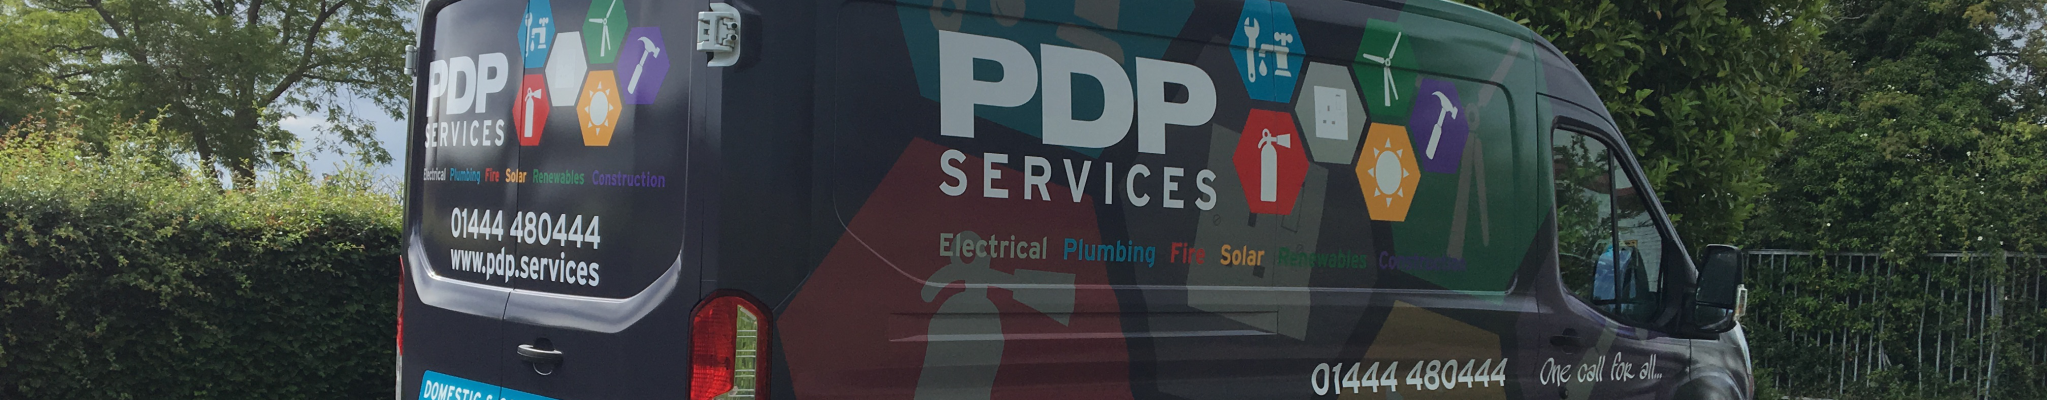 PDP Services Van